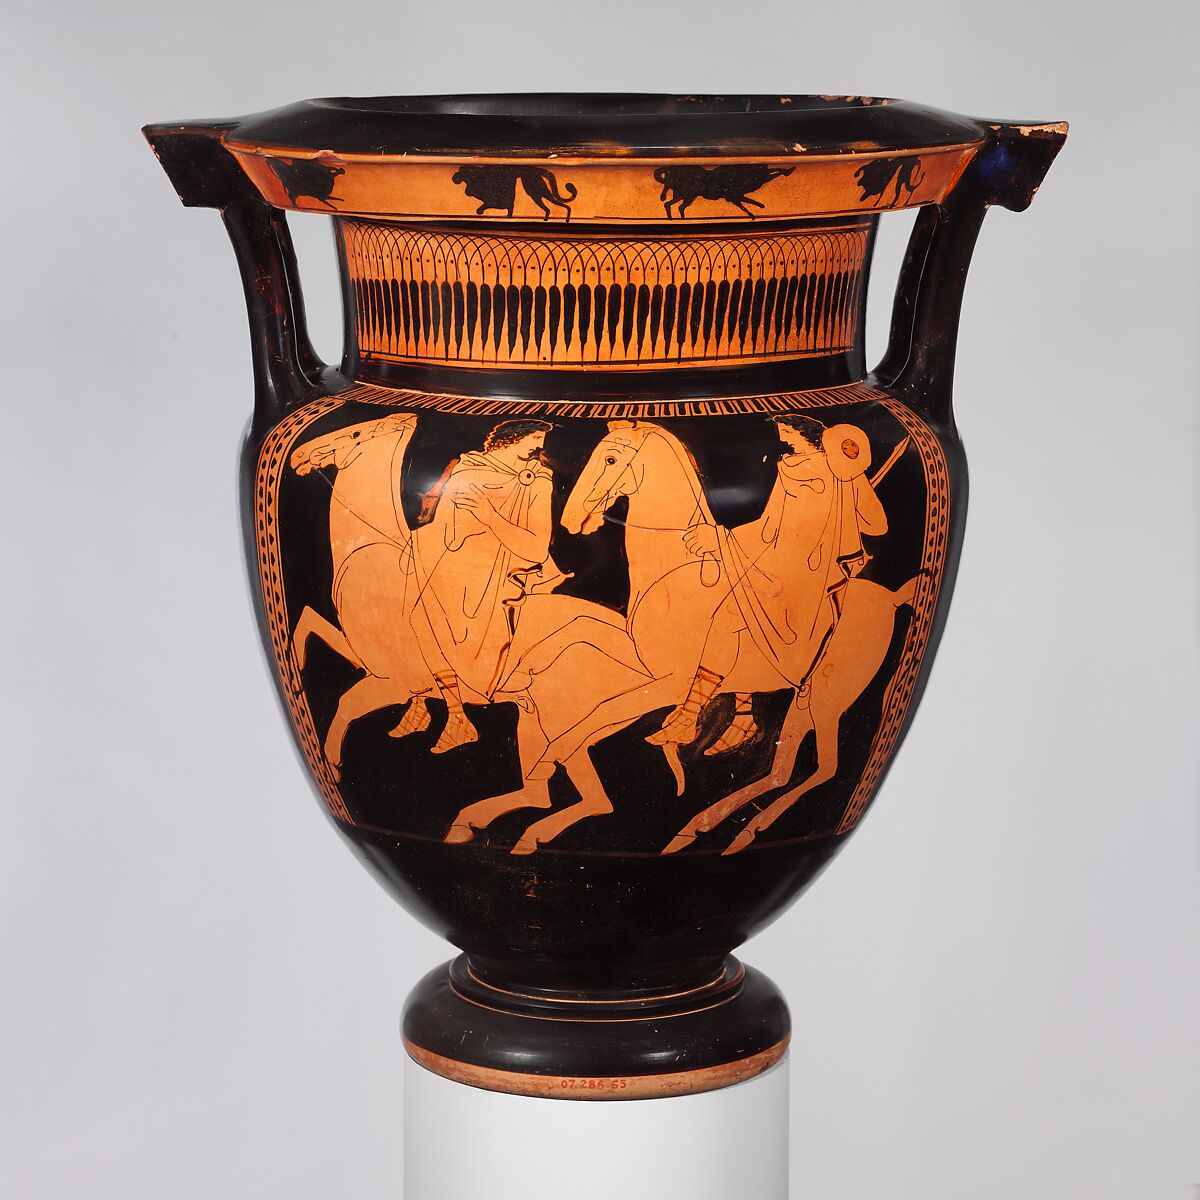 The Art of Classical Greece (ca. 11–11 B.C.)  Essay  The